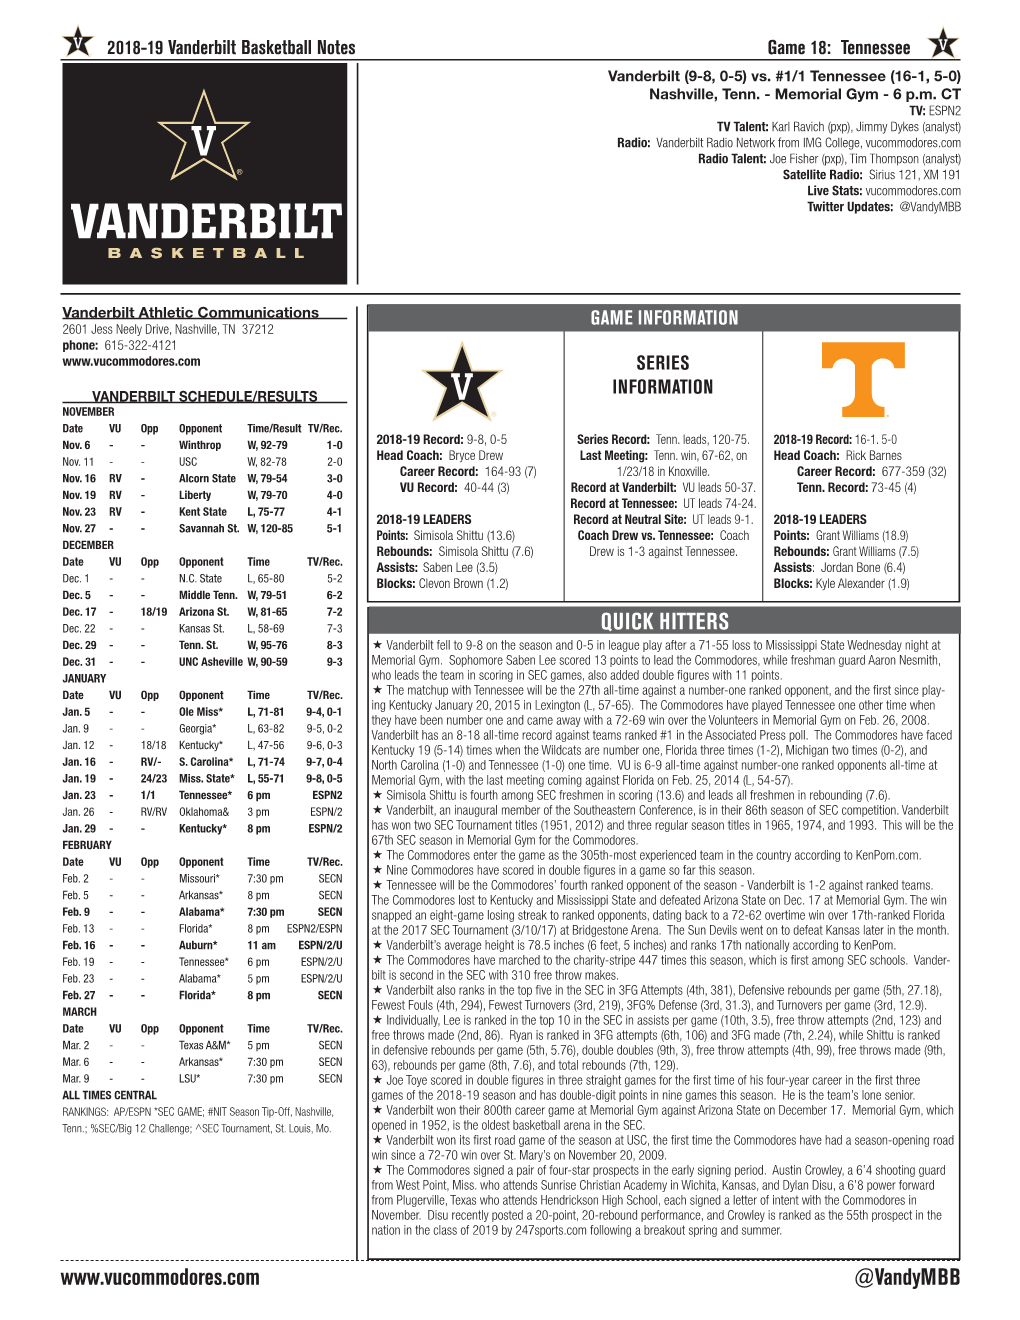 Tennessee Vanderbilt (9-8, 0-5) Vs